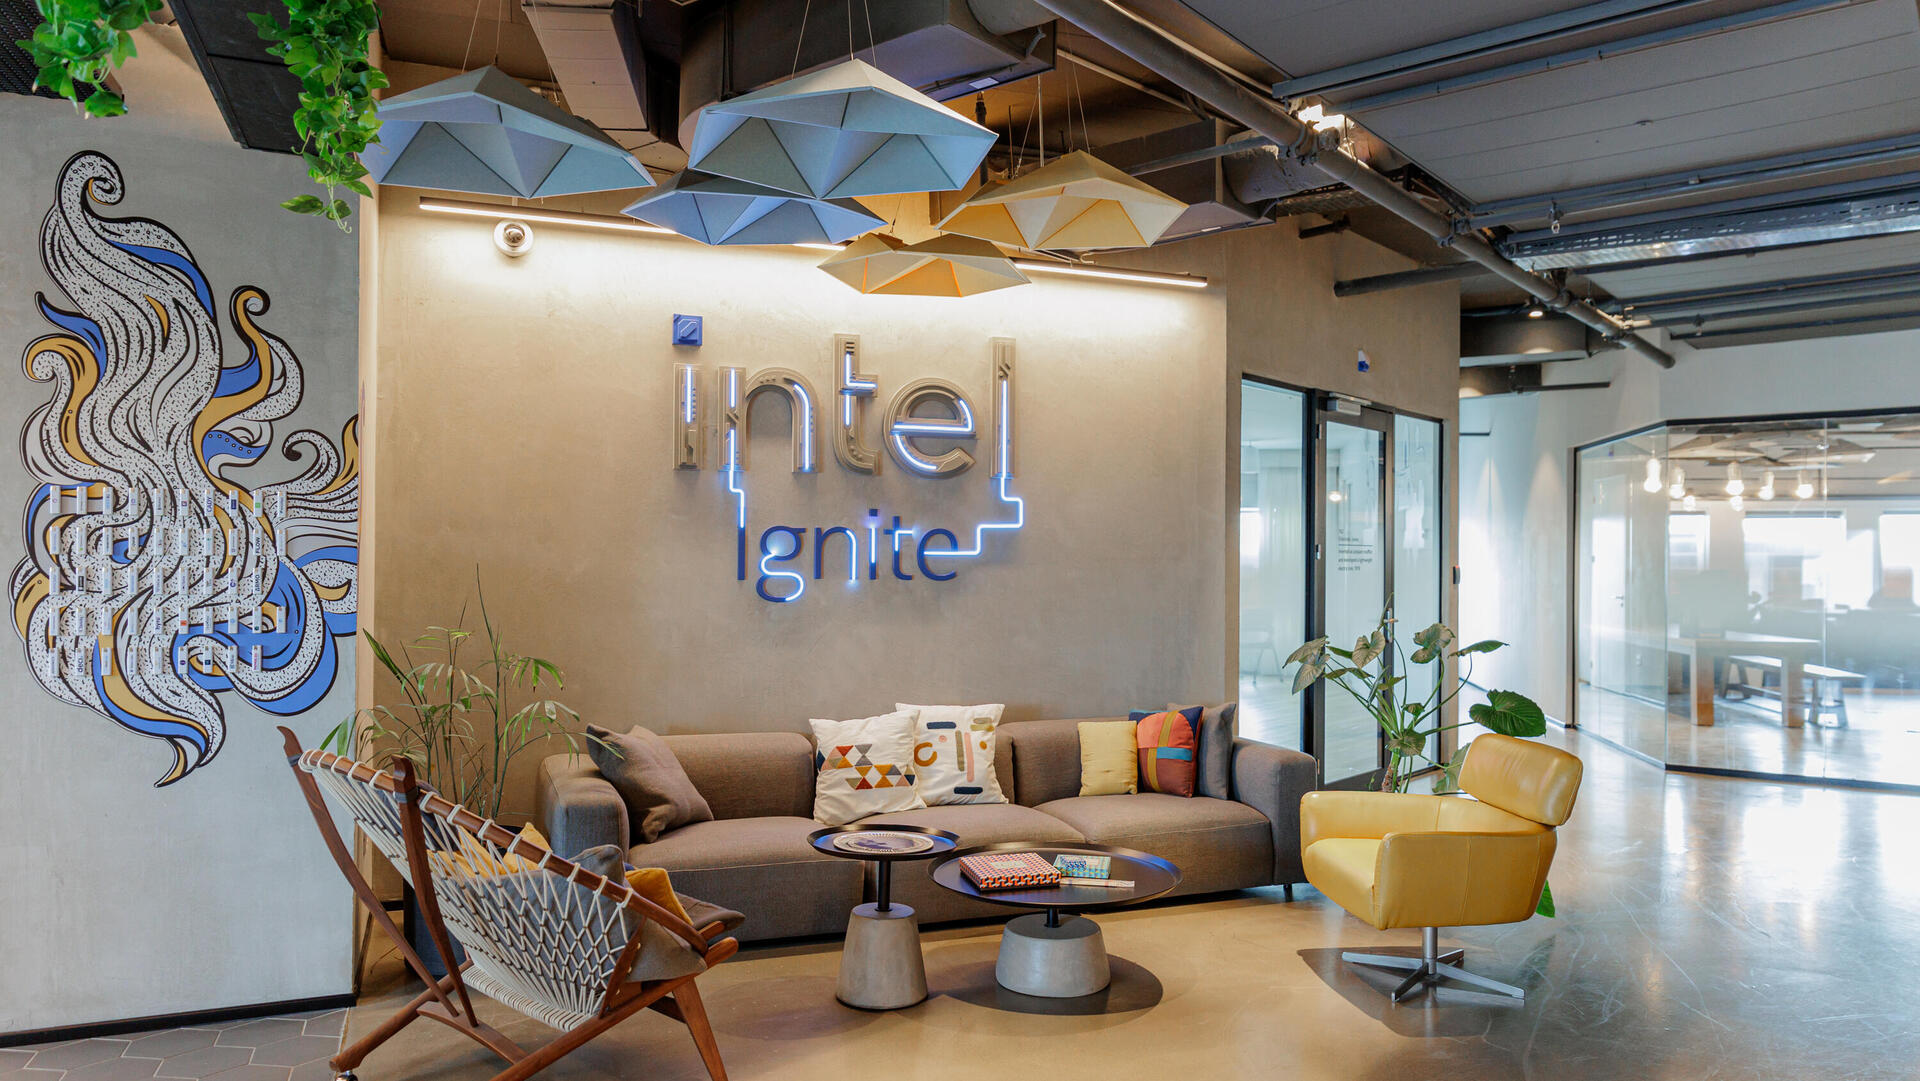 Intel Ignite Tel Aviv hub